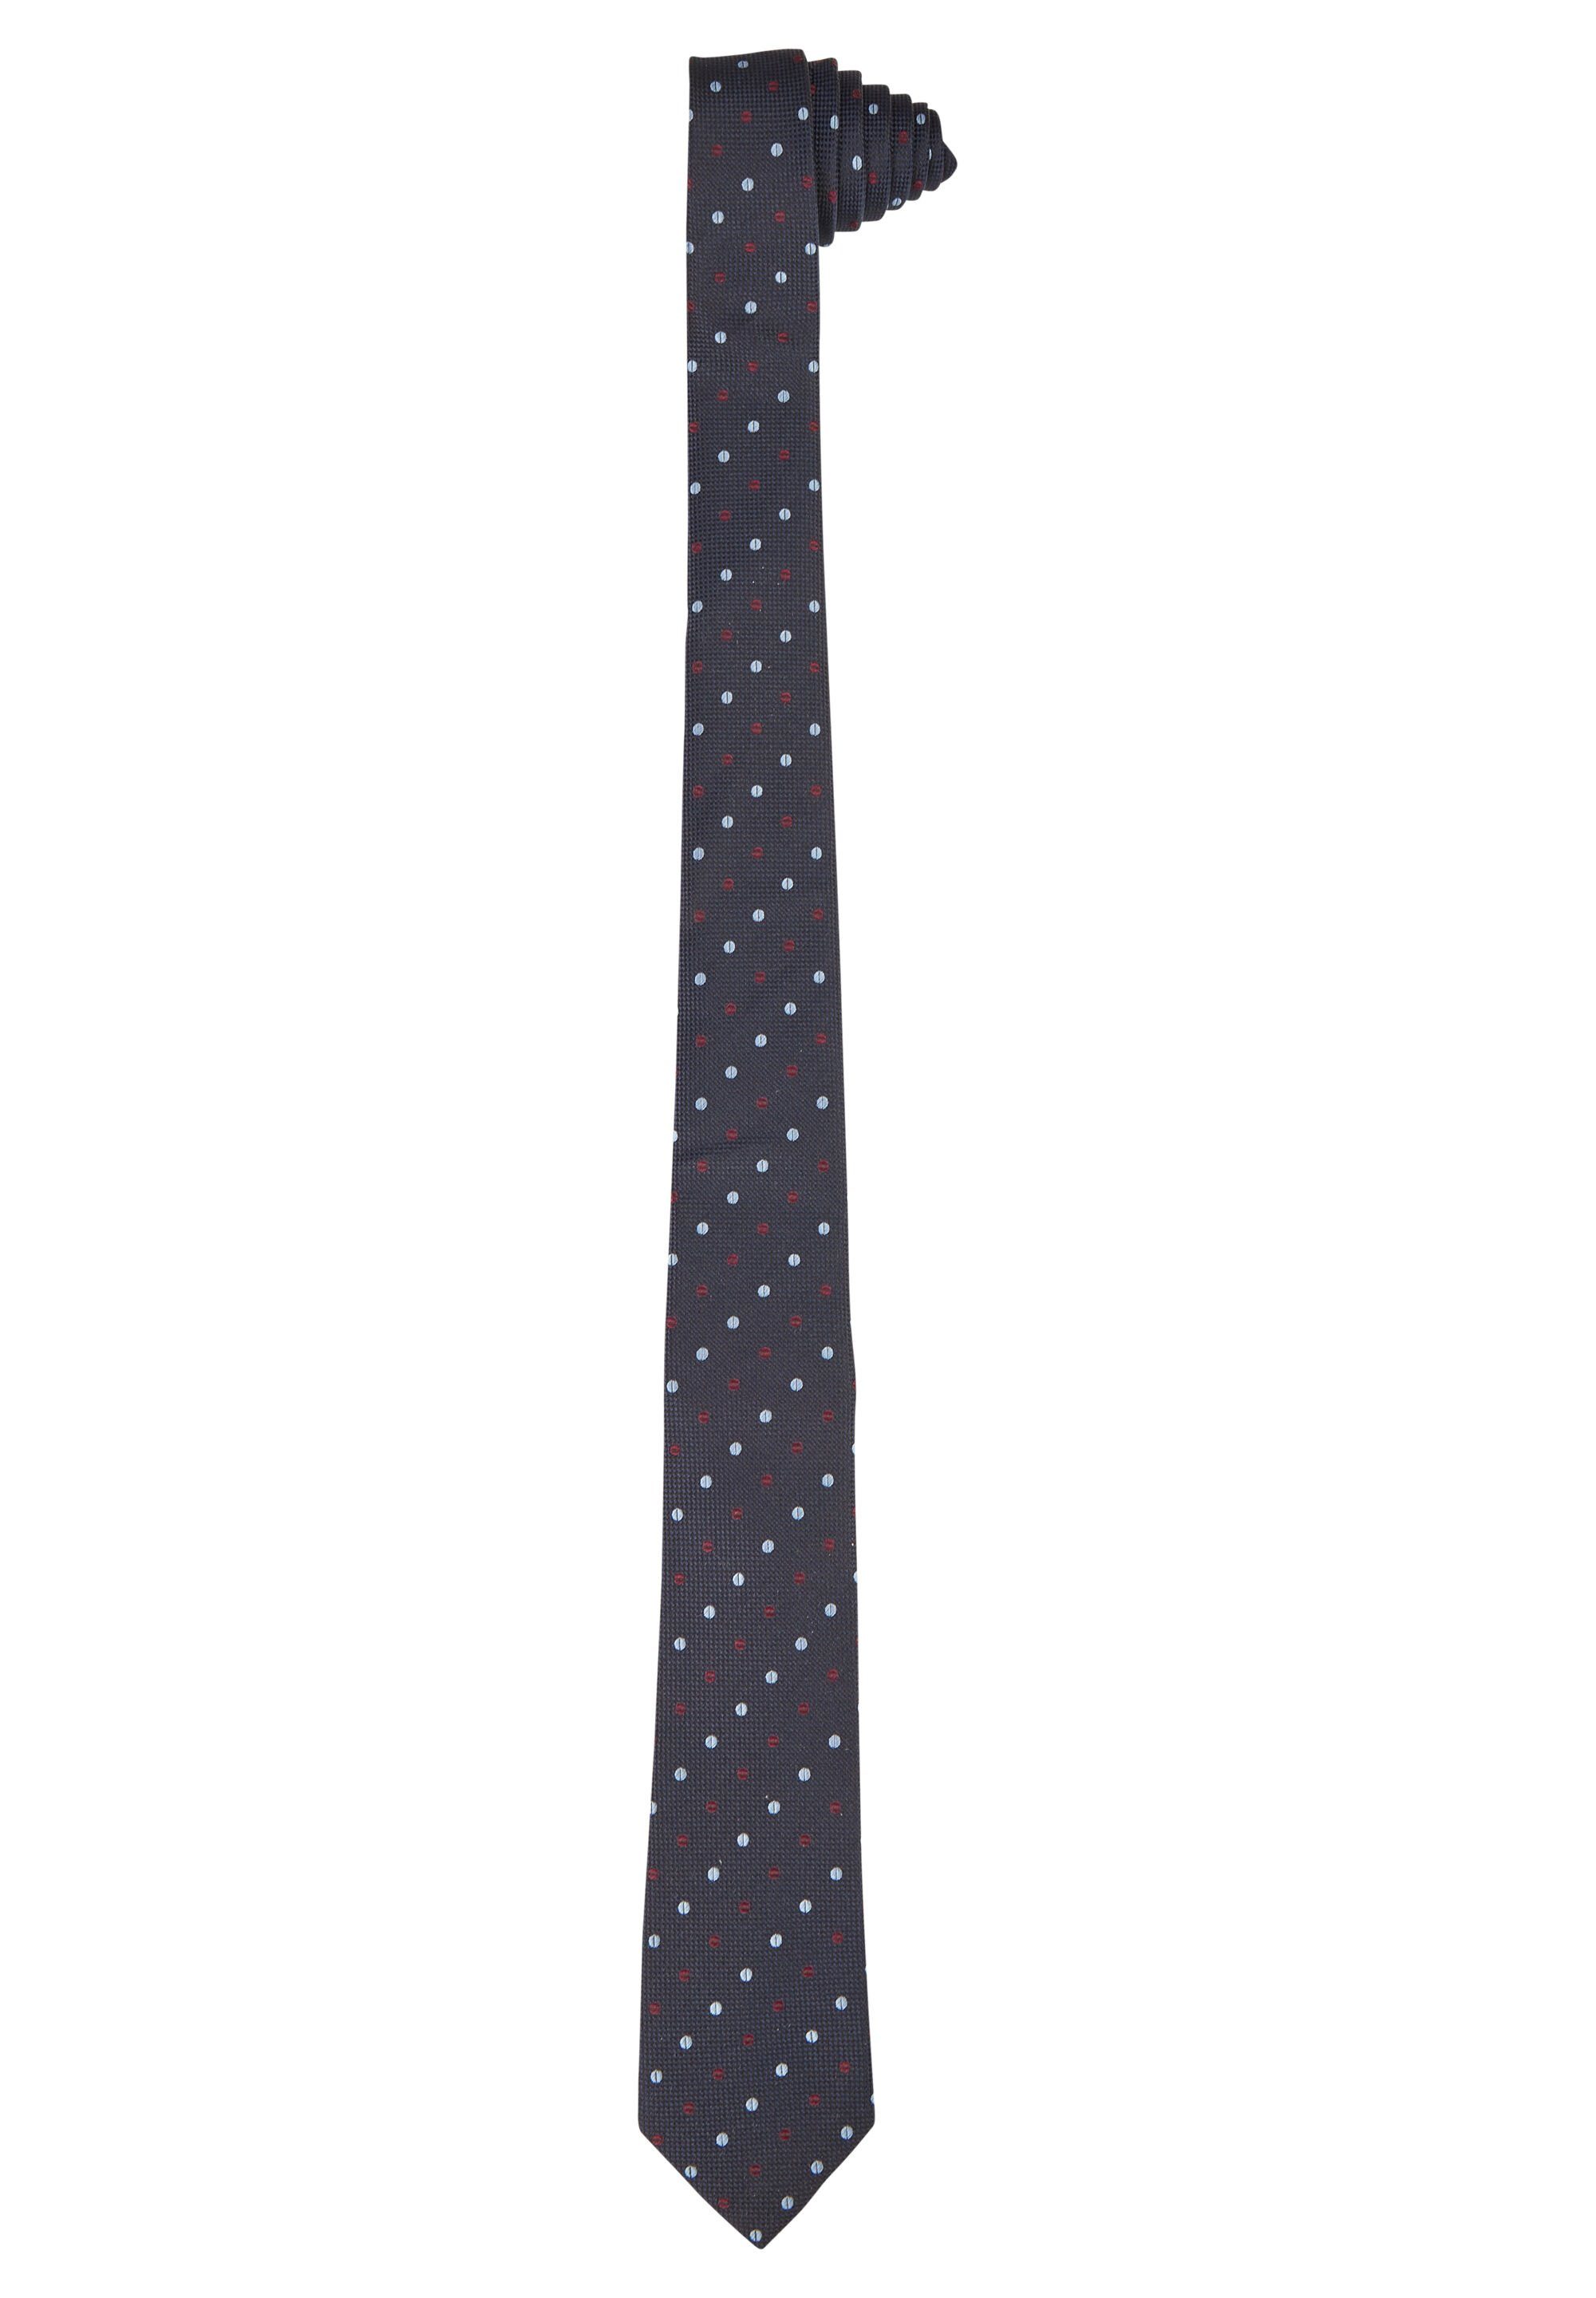 mit Krawatte HECHTER modernem navy Muster PARIS